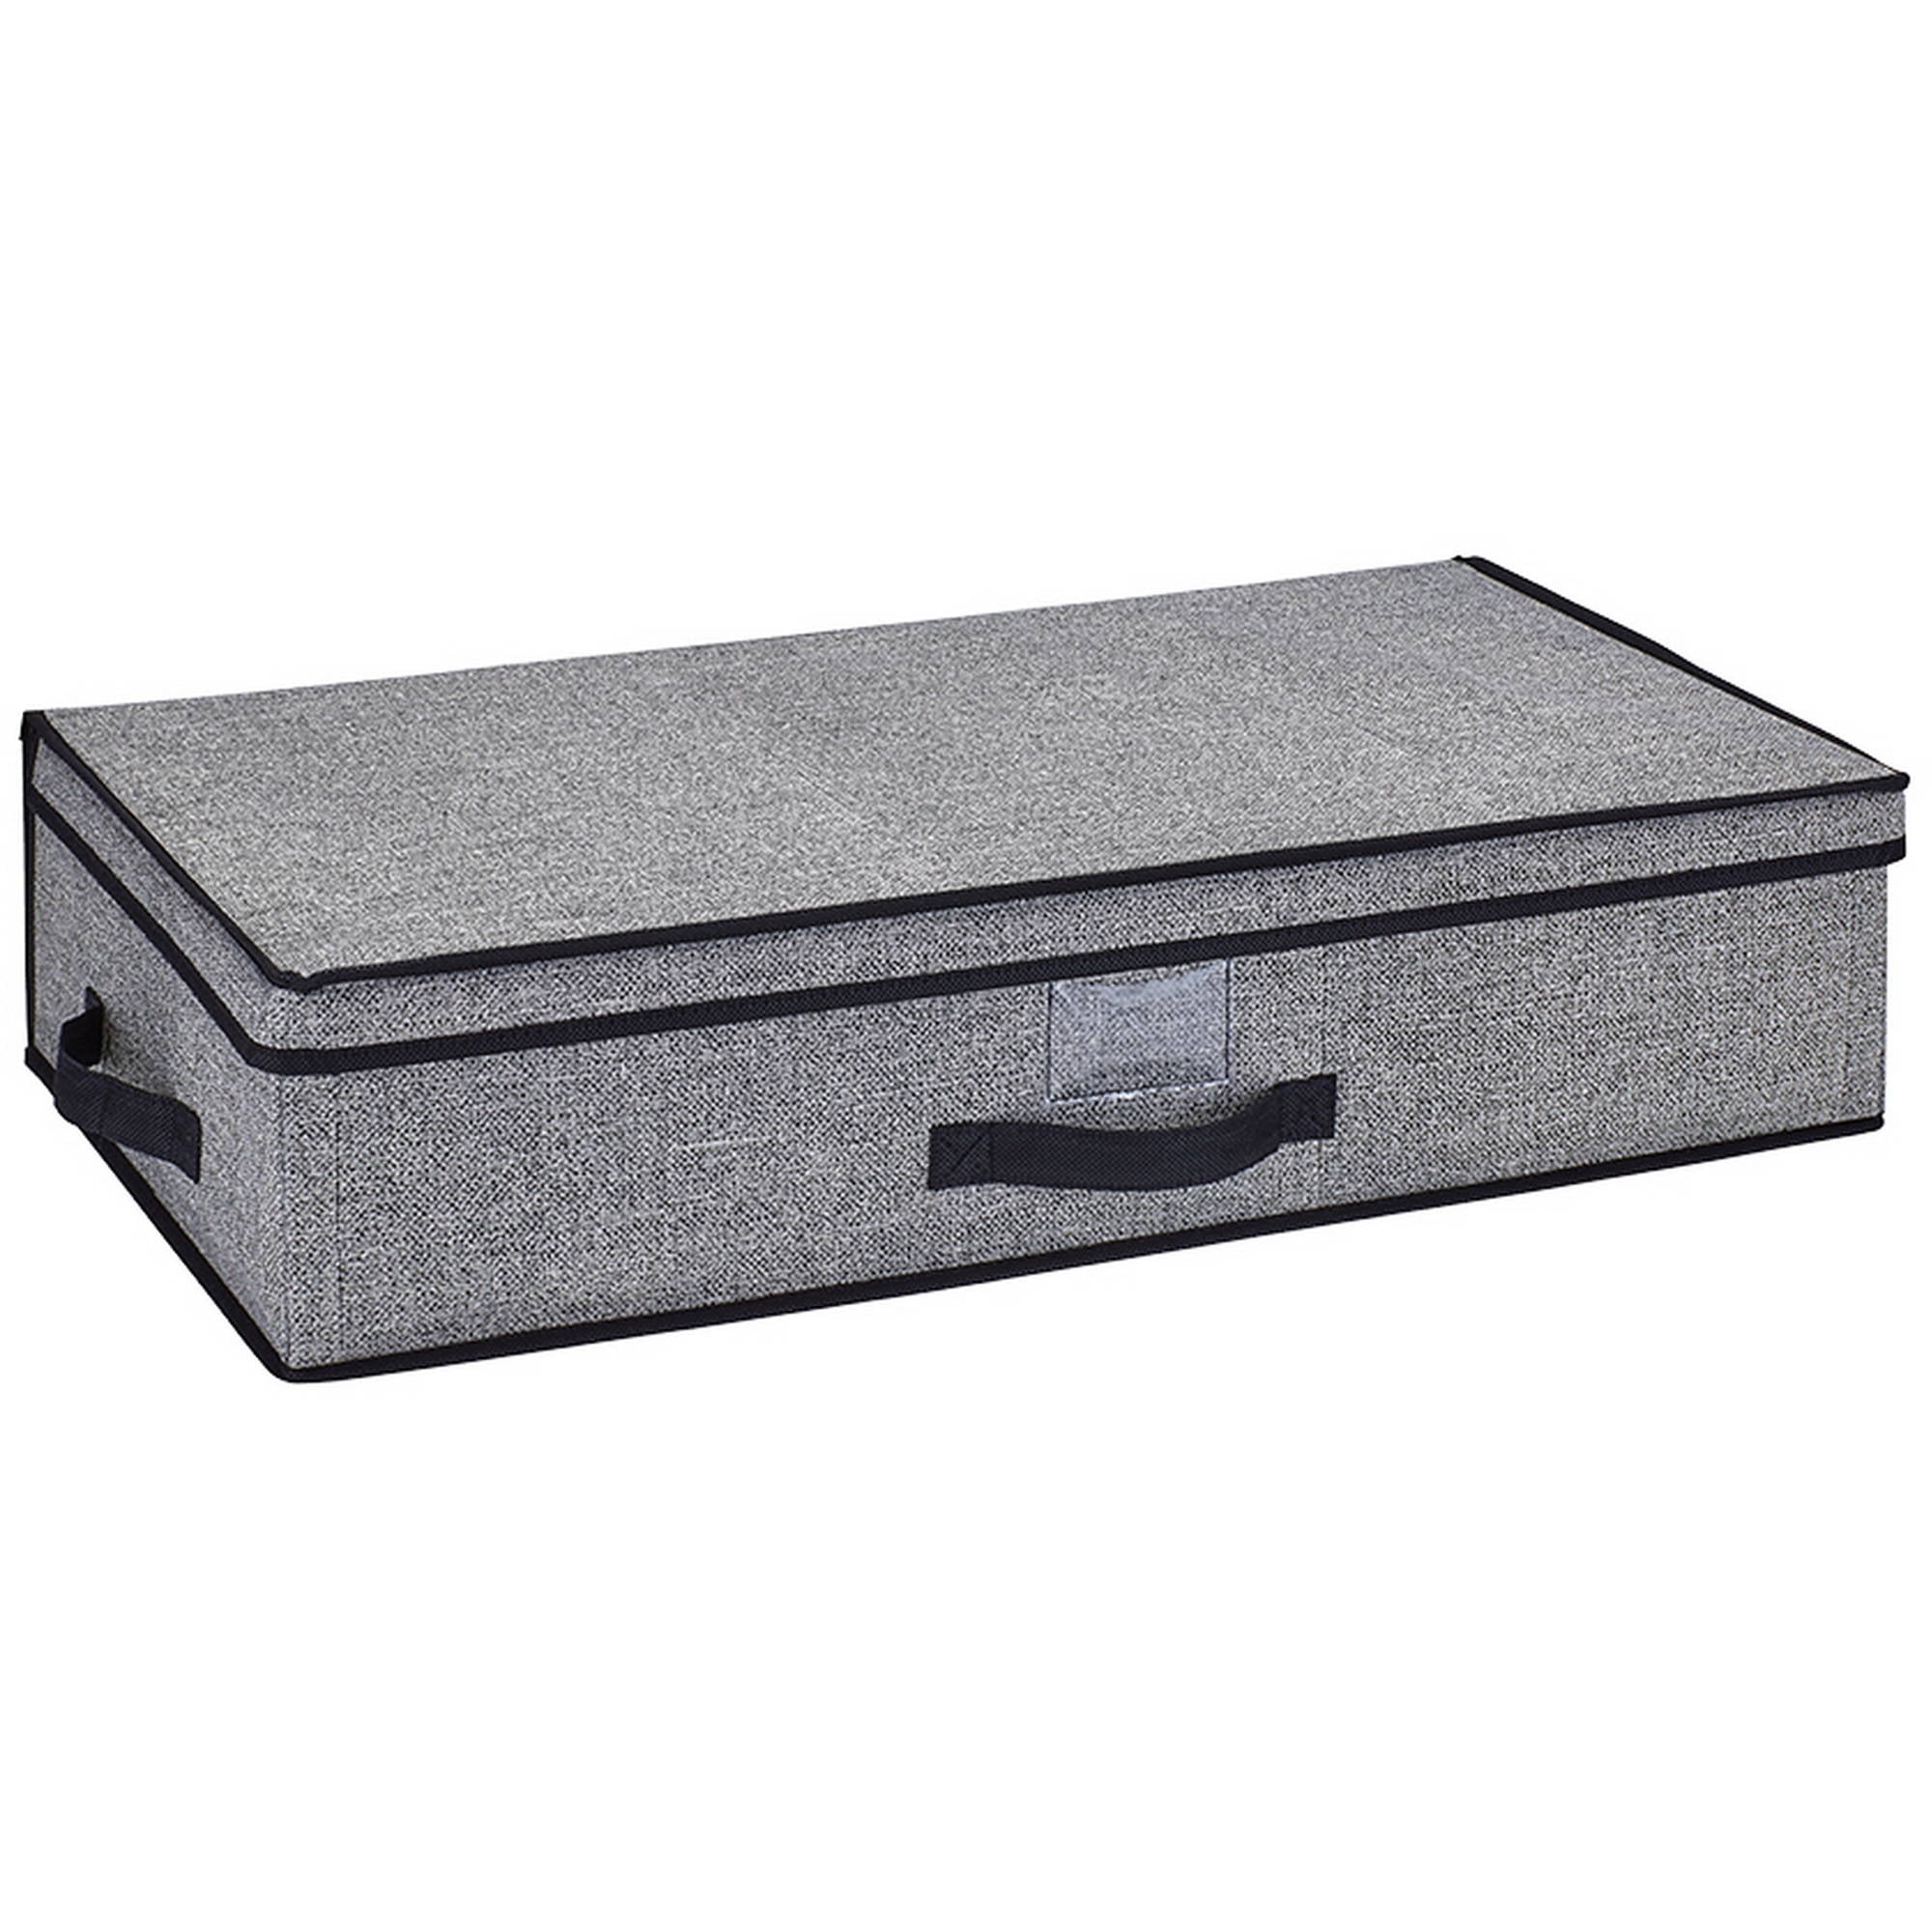 Simplify Under-the-Bed Storage Box, Black